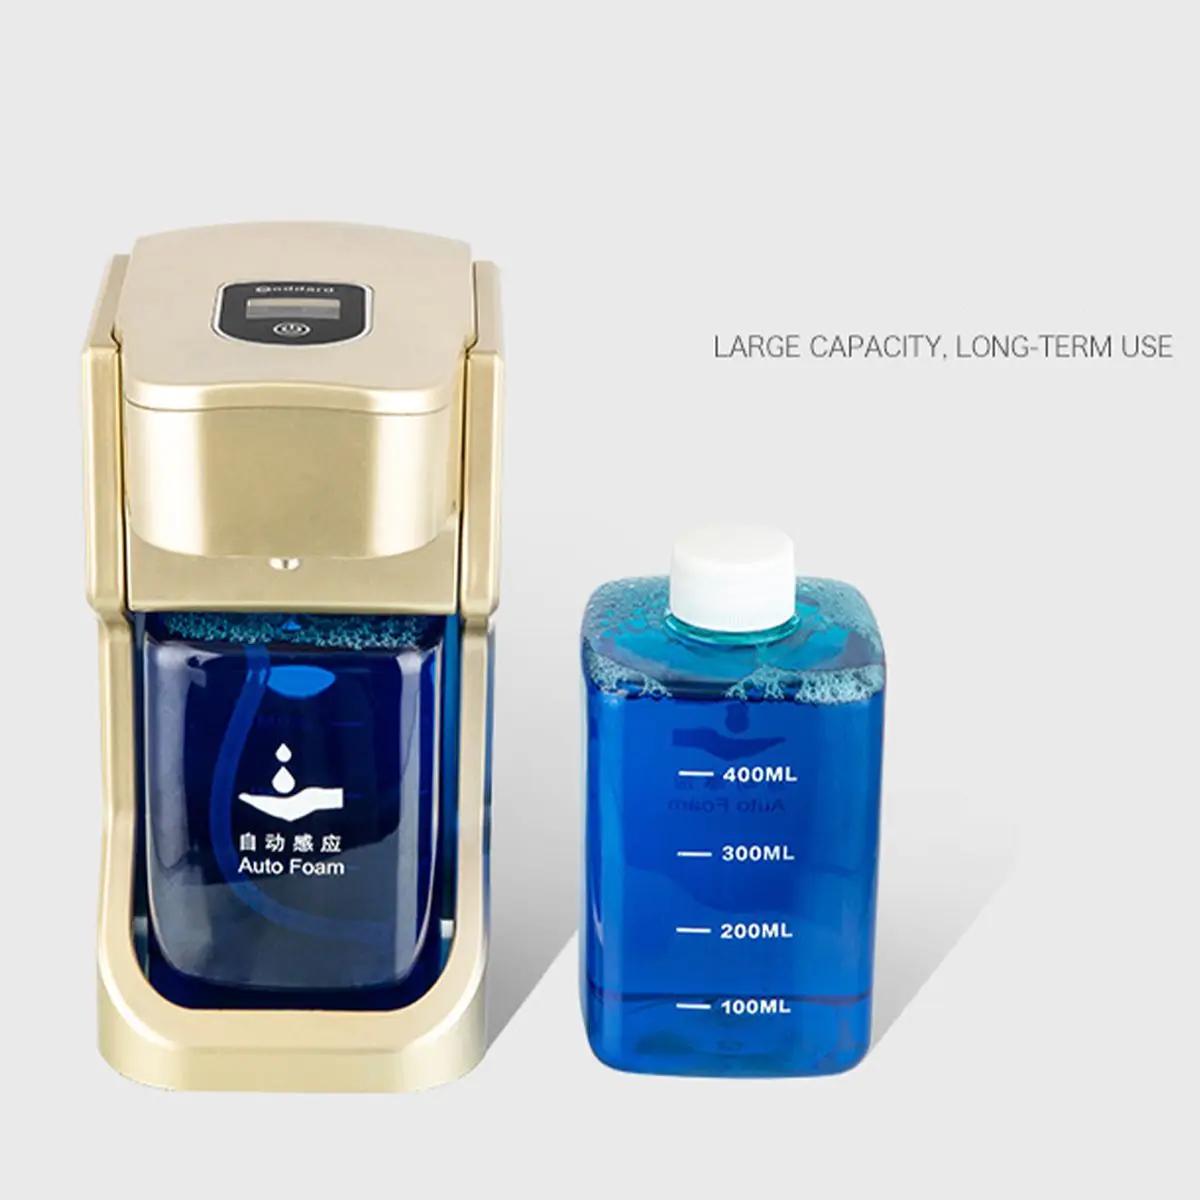 

500Ml Liquid Soap Dispenser Automatic Smart-Sensor-Touchless ABS Electroplated Sanitizer Dispensador Bottle for Kitchen Bathroo